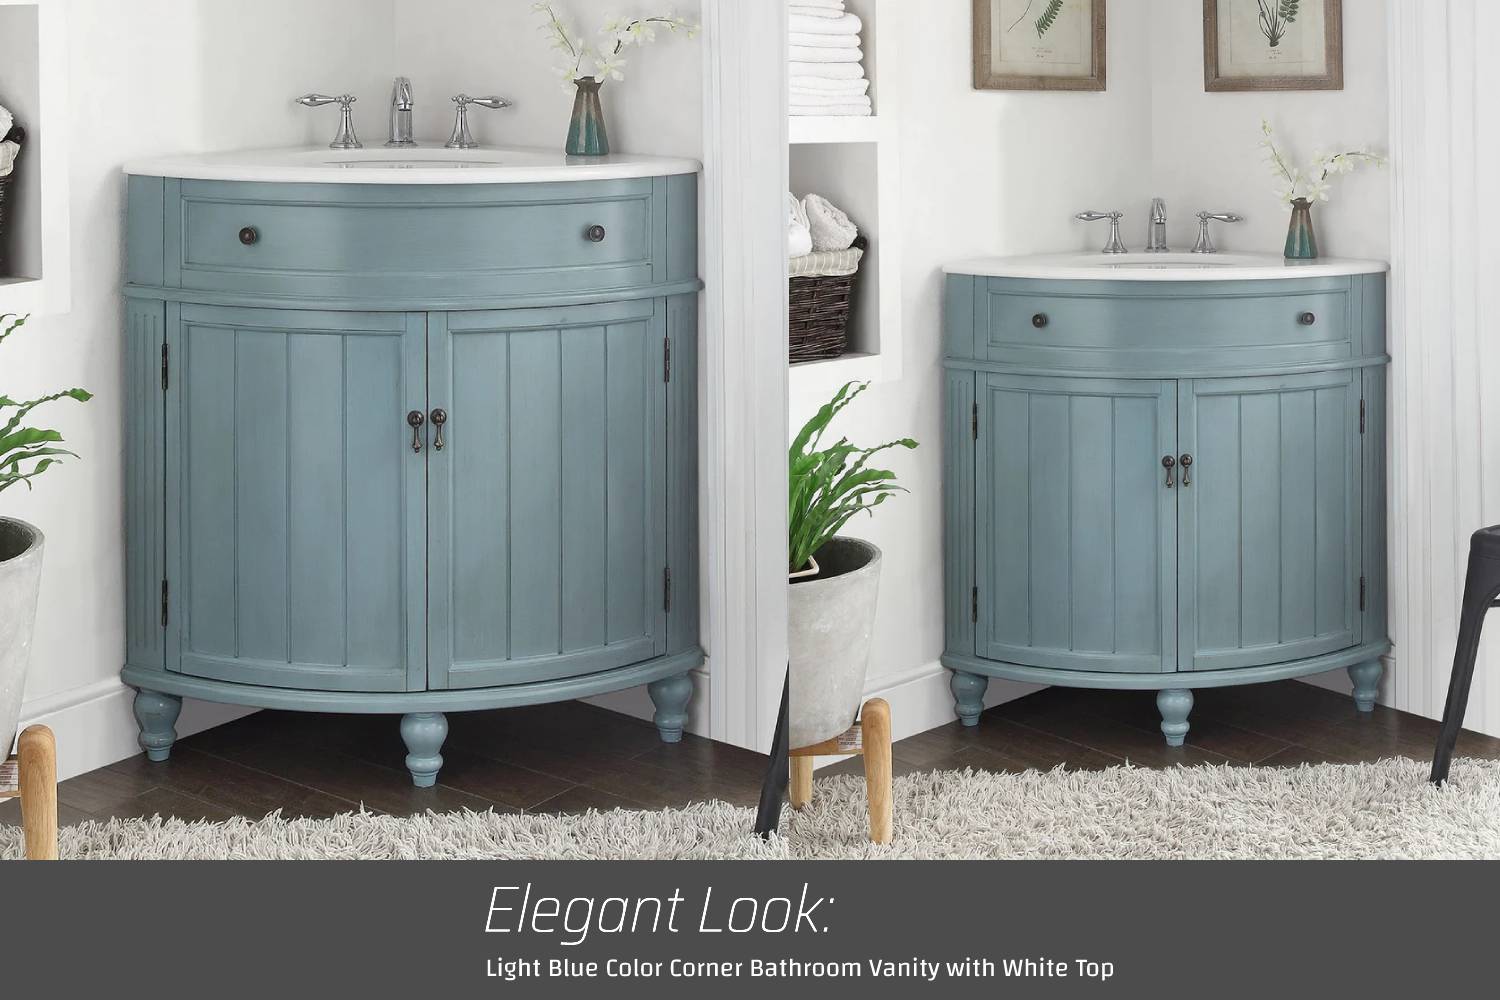 Elegant look light blue color corner bathroom vanity with white top